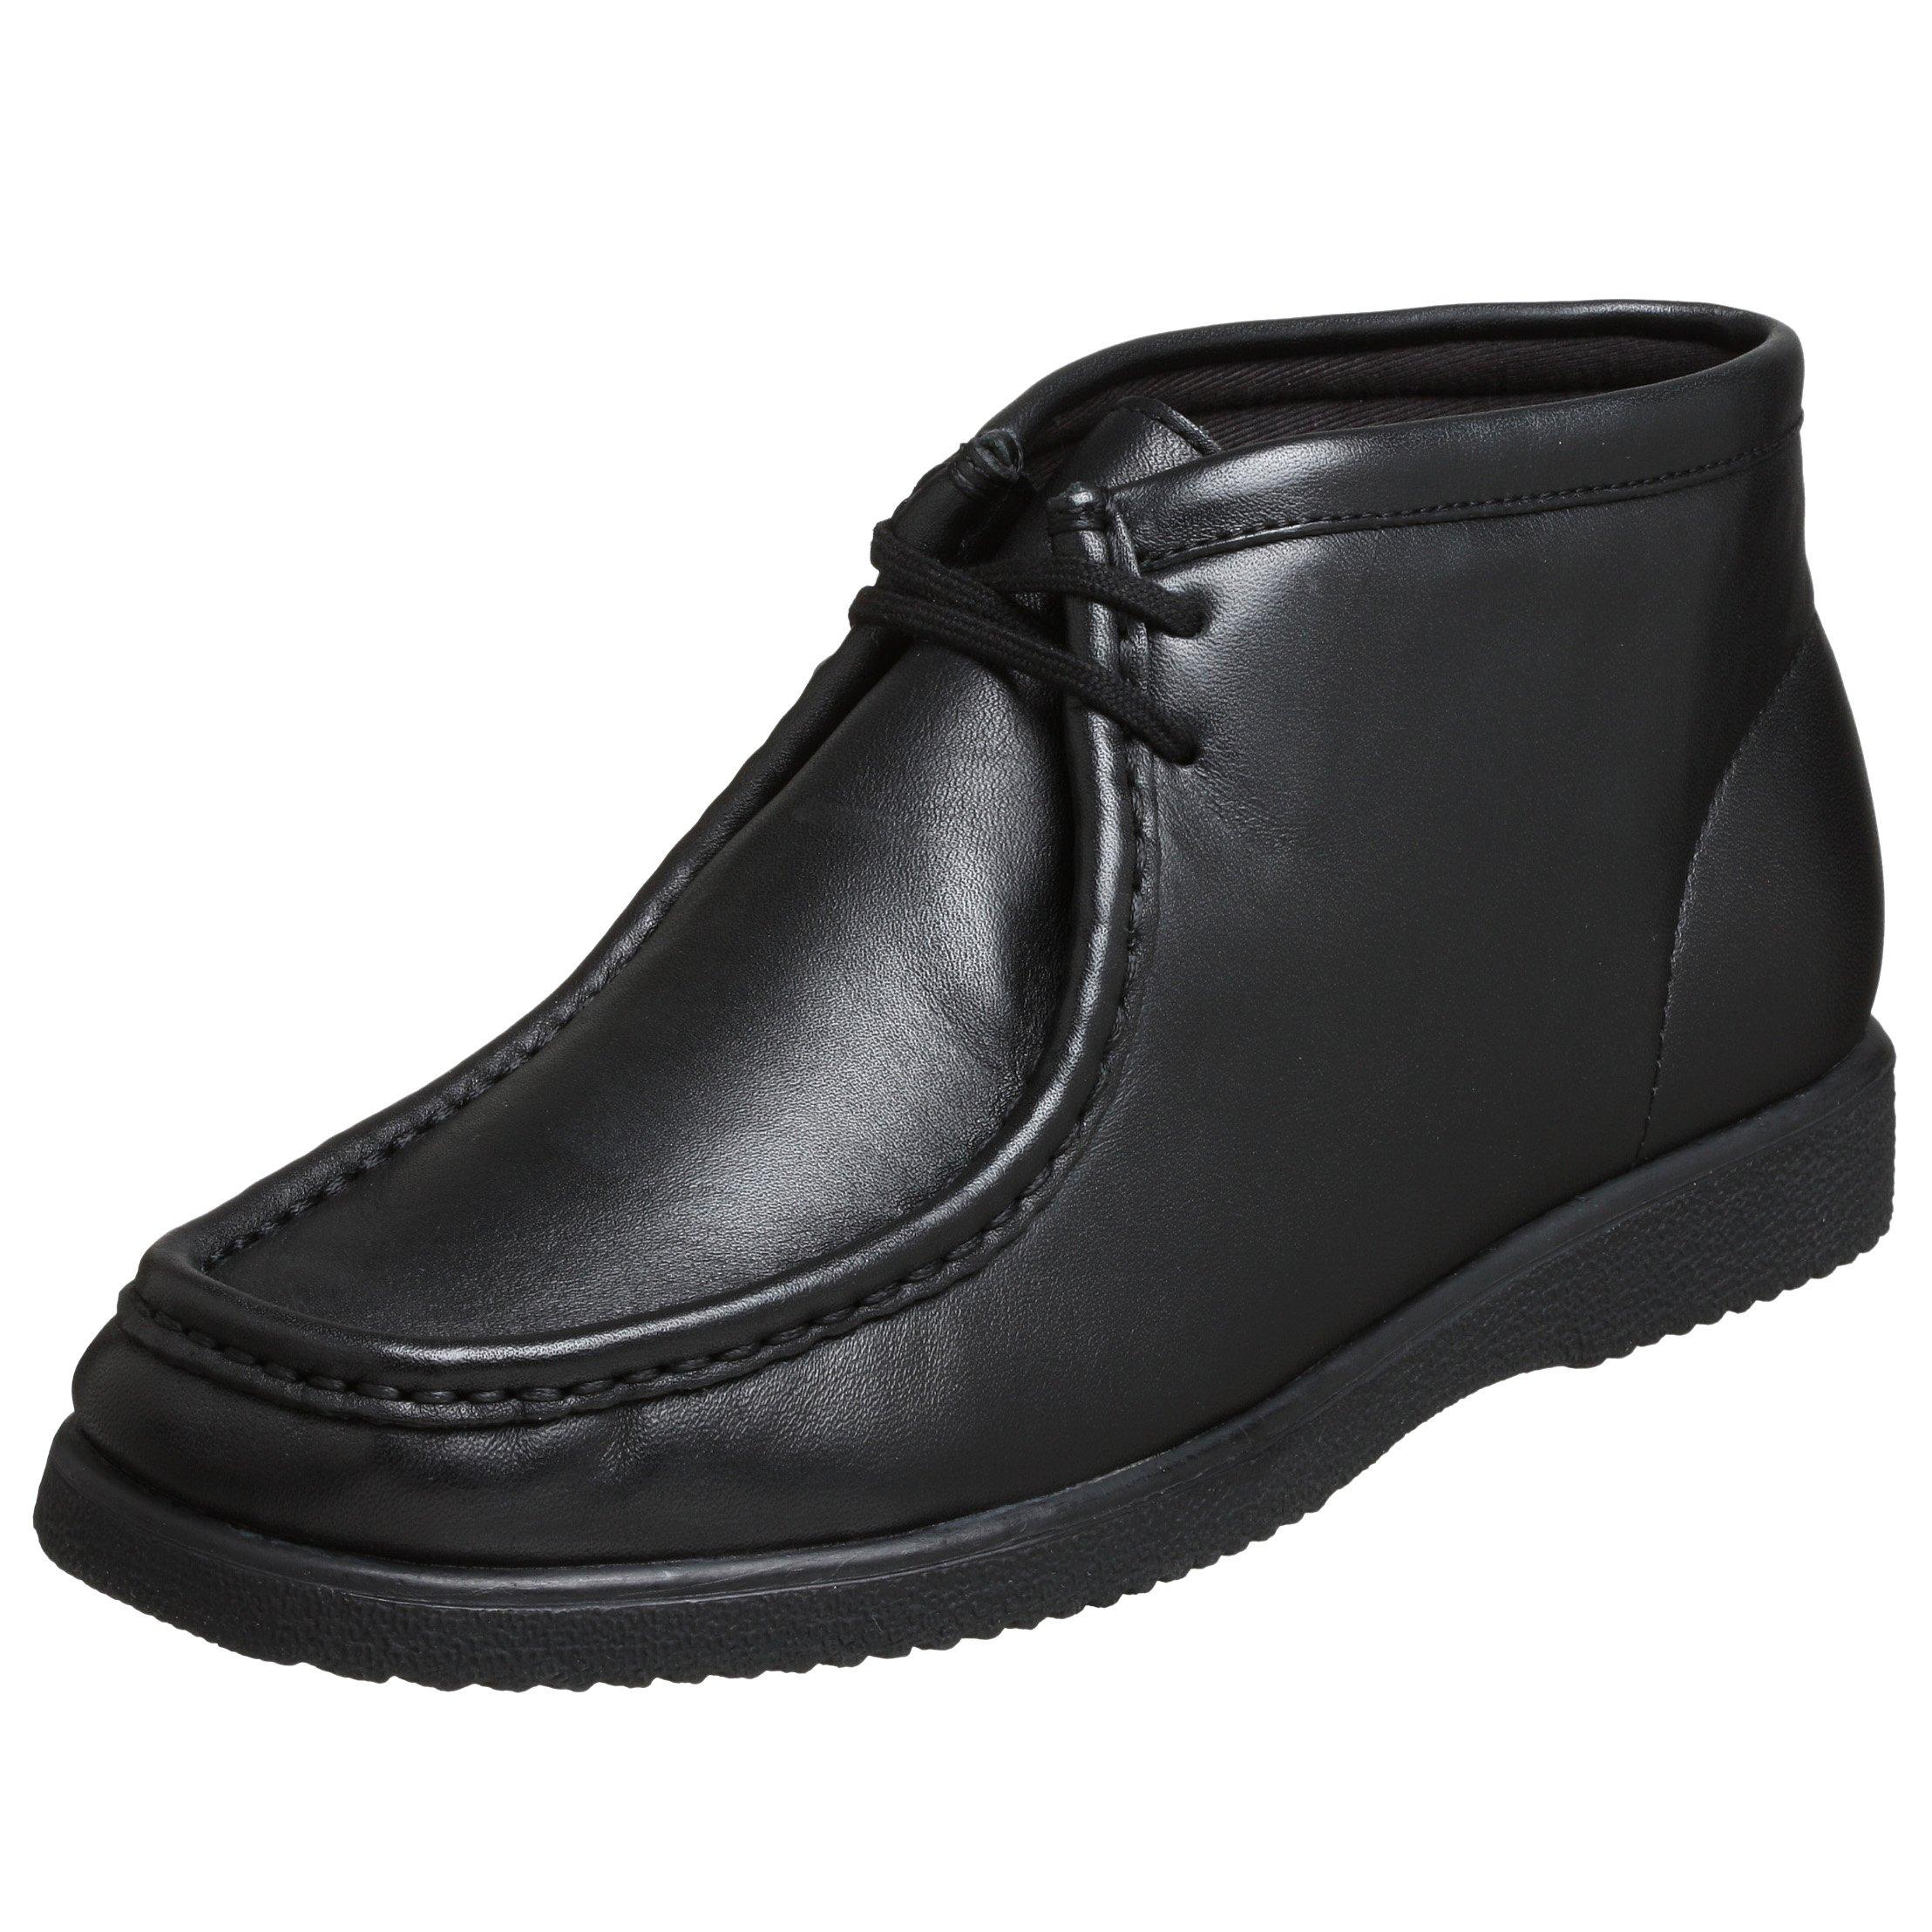 Hush Puppies Bridgeport Boot,black Leather,13 M Us for Men | Lyst